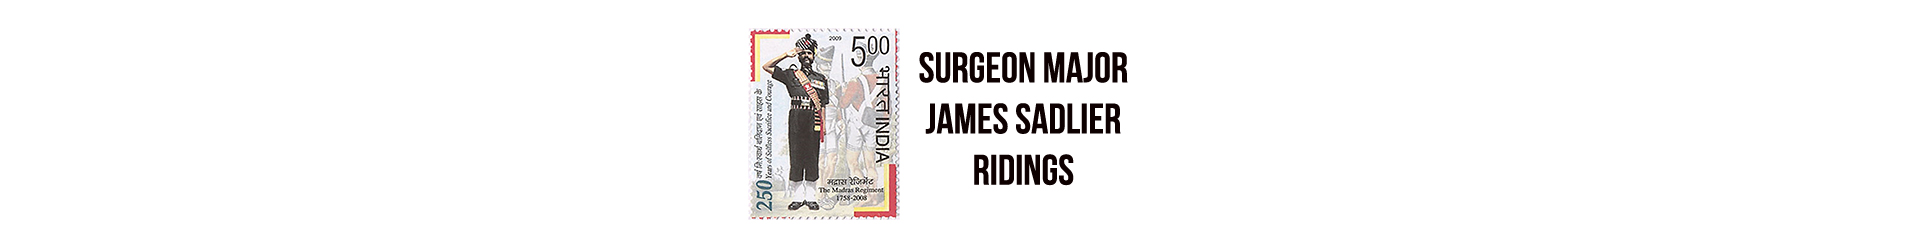 Surgeon Major James Sadlier Ridings